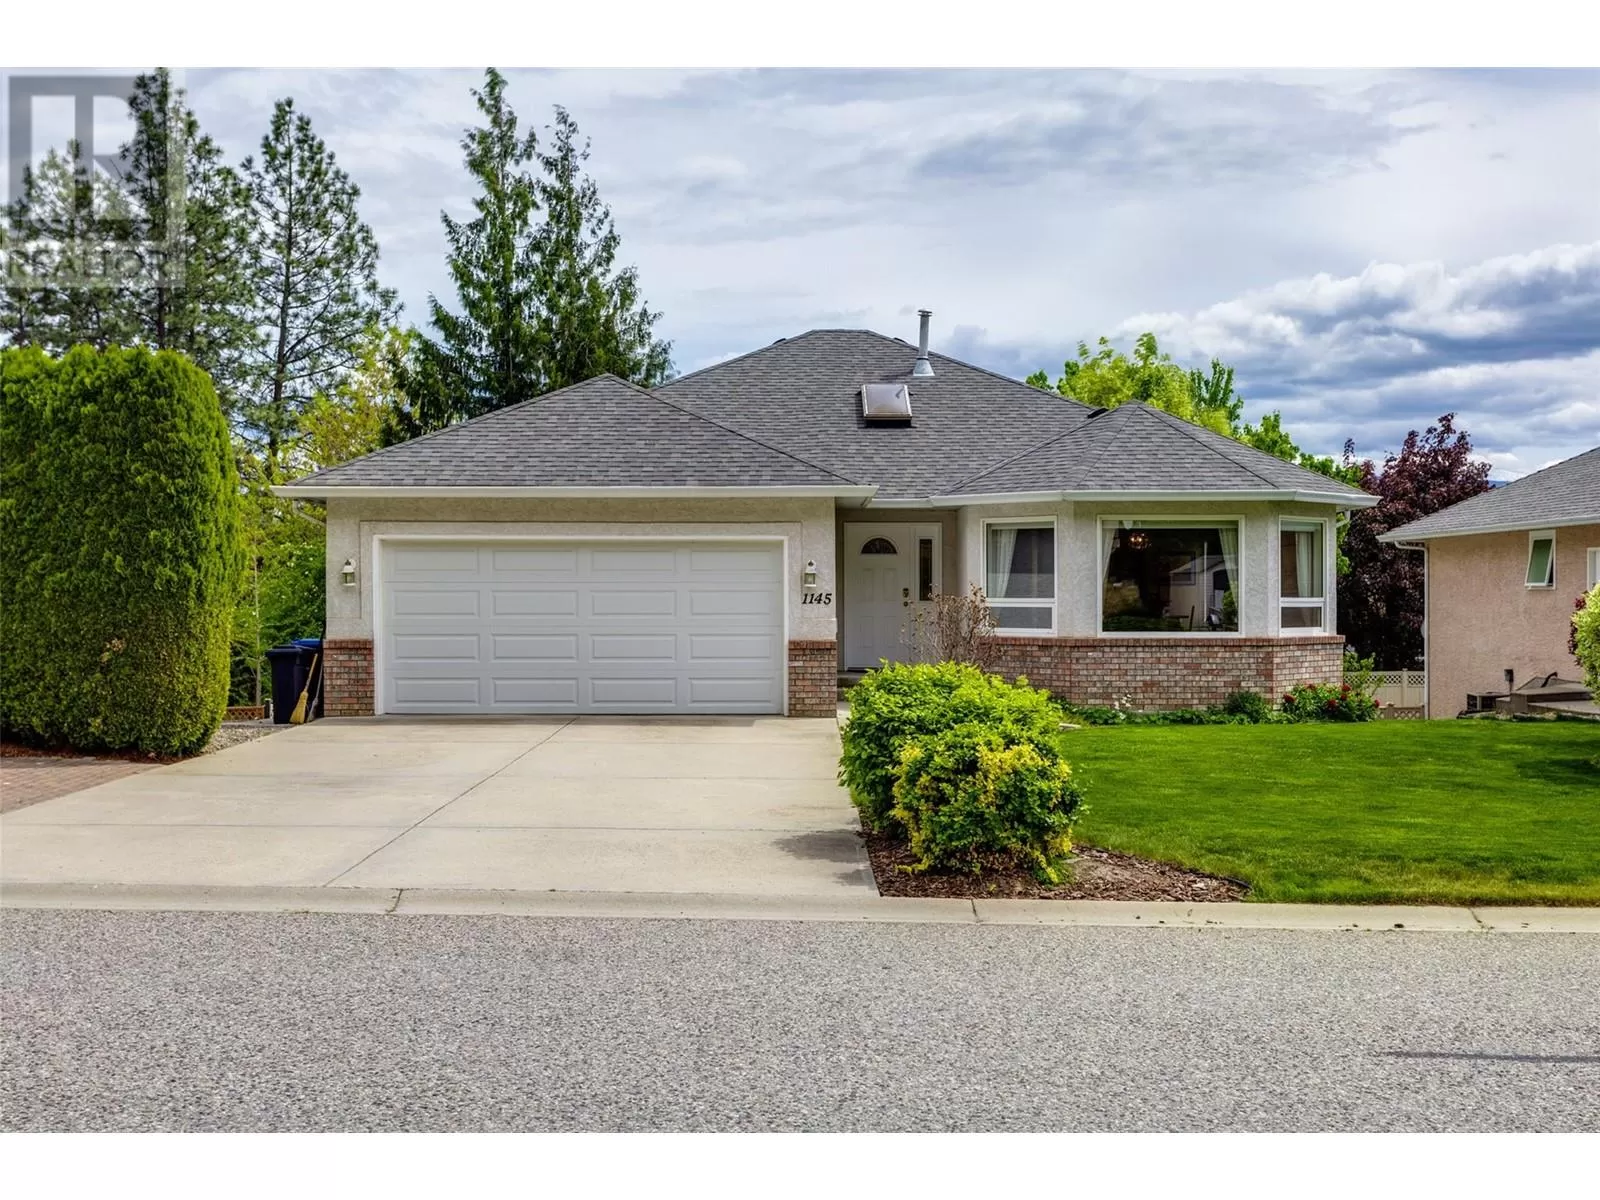 House for rent: 1145 Caledonia Way, West Kelowna, British Columbia V1Z 3N7